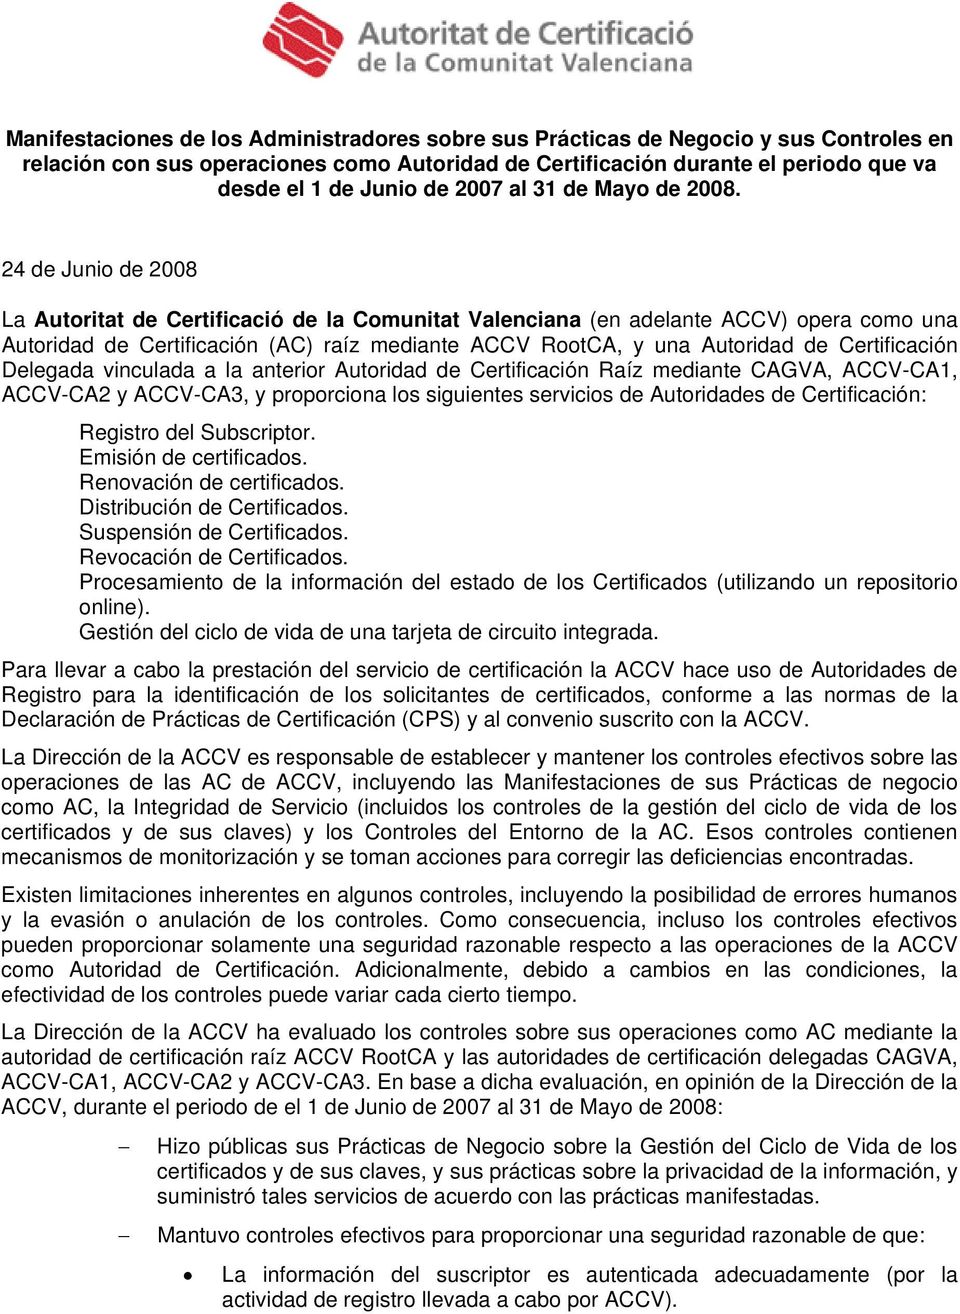 24 de Junio de 2008 La Autoritat de Certificació de la Comunitat Valenciana (en adelante ACCV) opera como una Autoridad de Certificación (AC) raíz mediante ACCV RootCA, y una Autoridad de